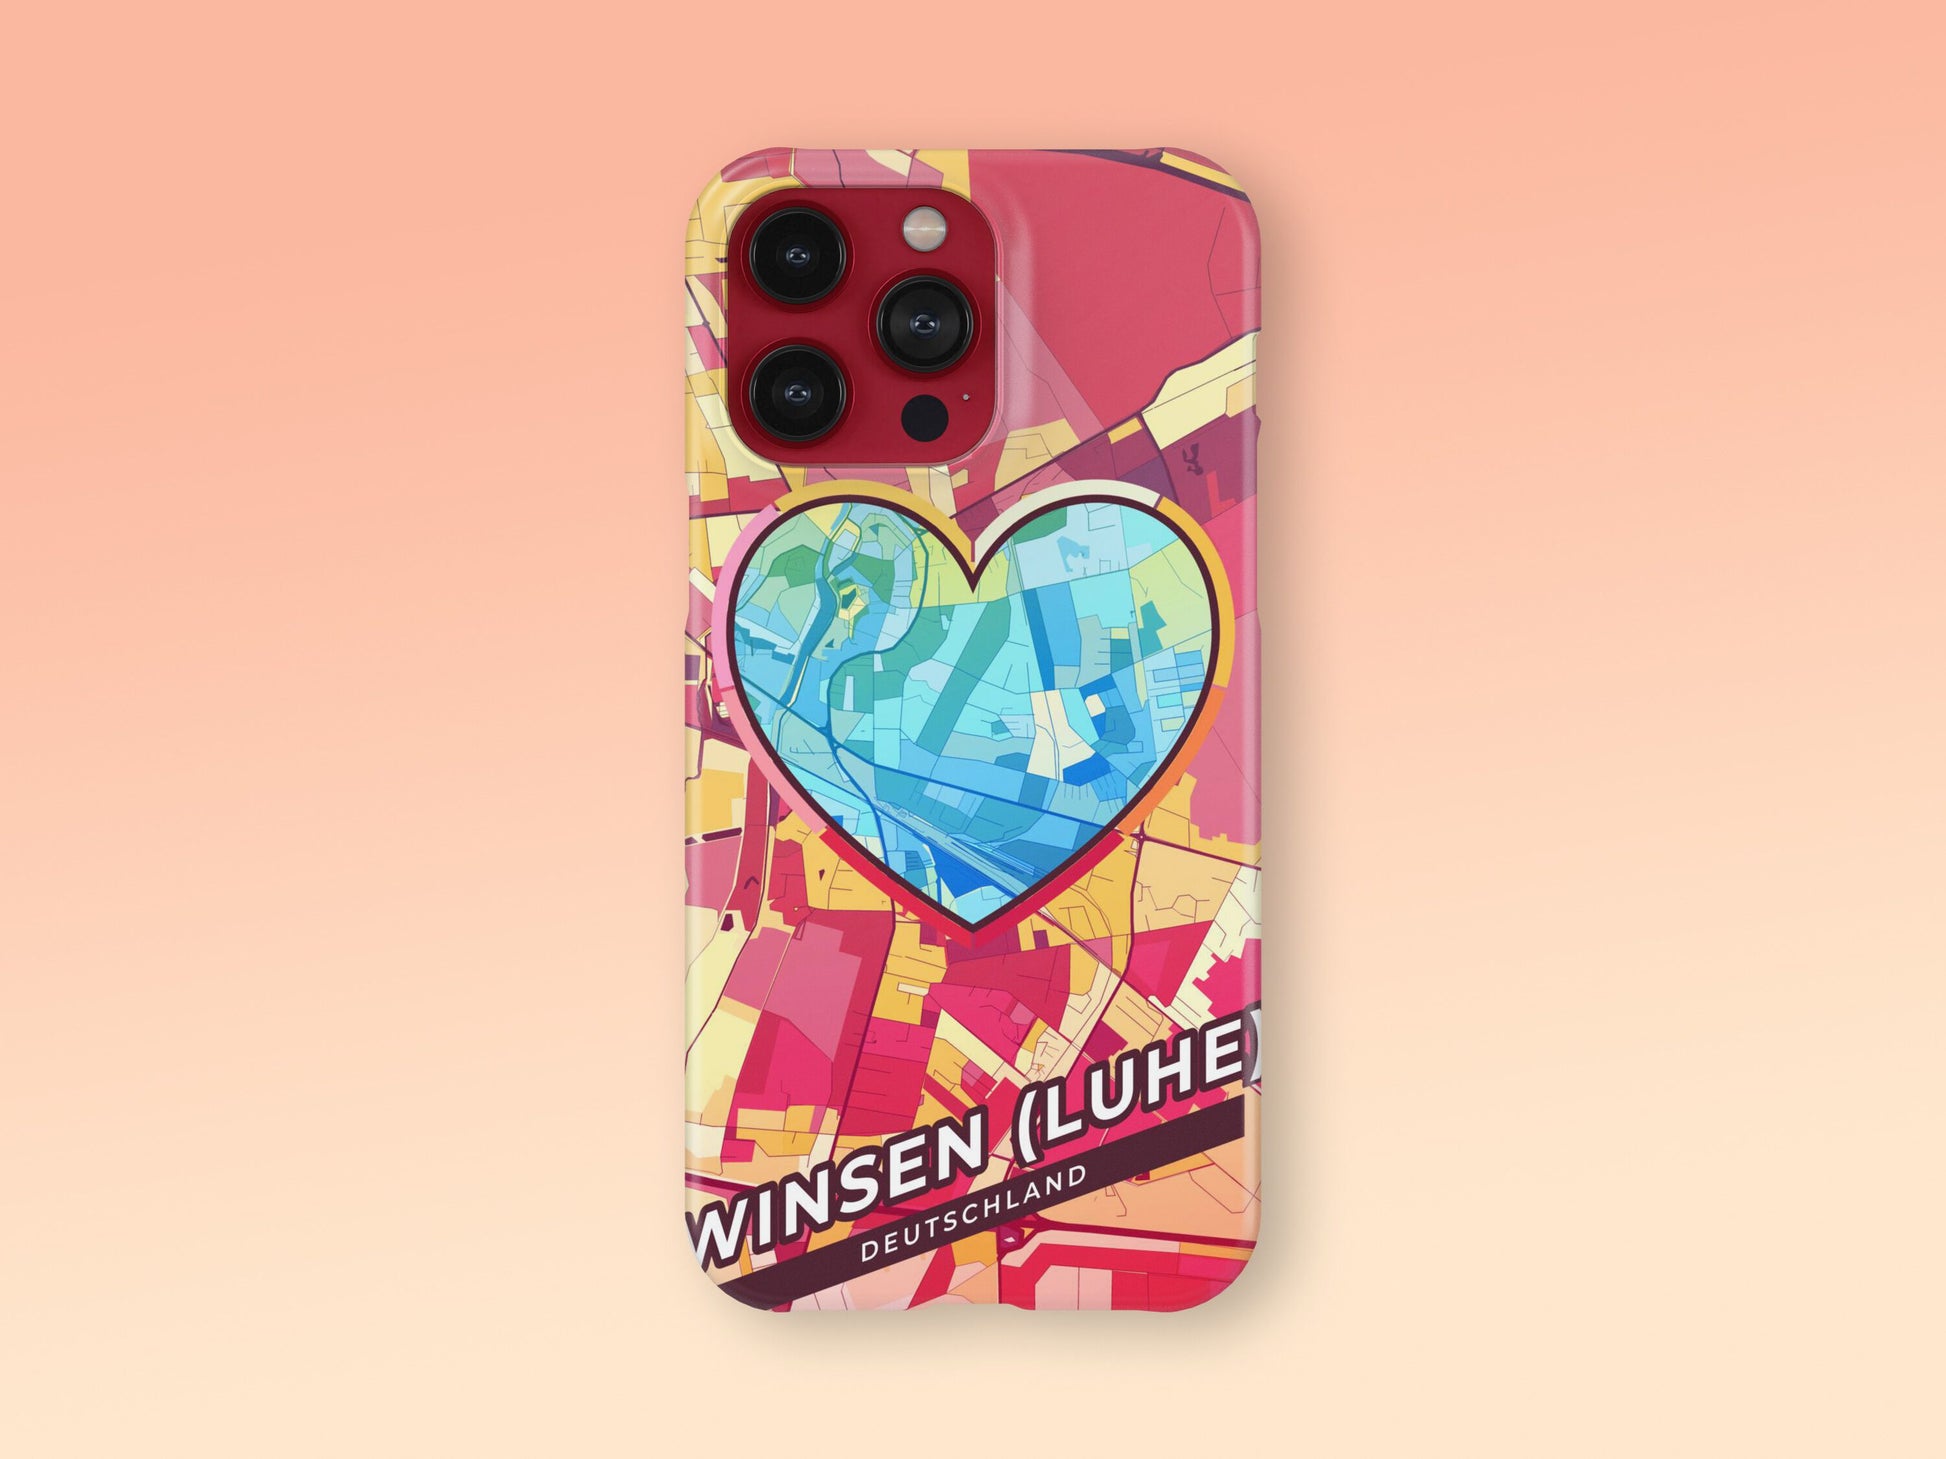 Winsen (Luhe) Deutschland slim phone case with colorful icon 2